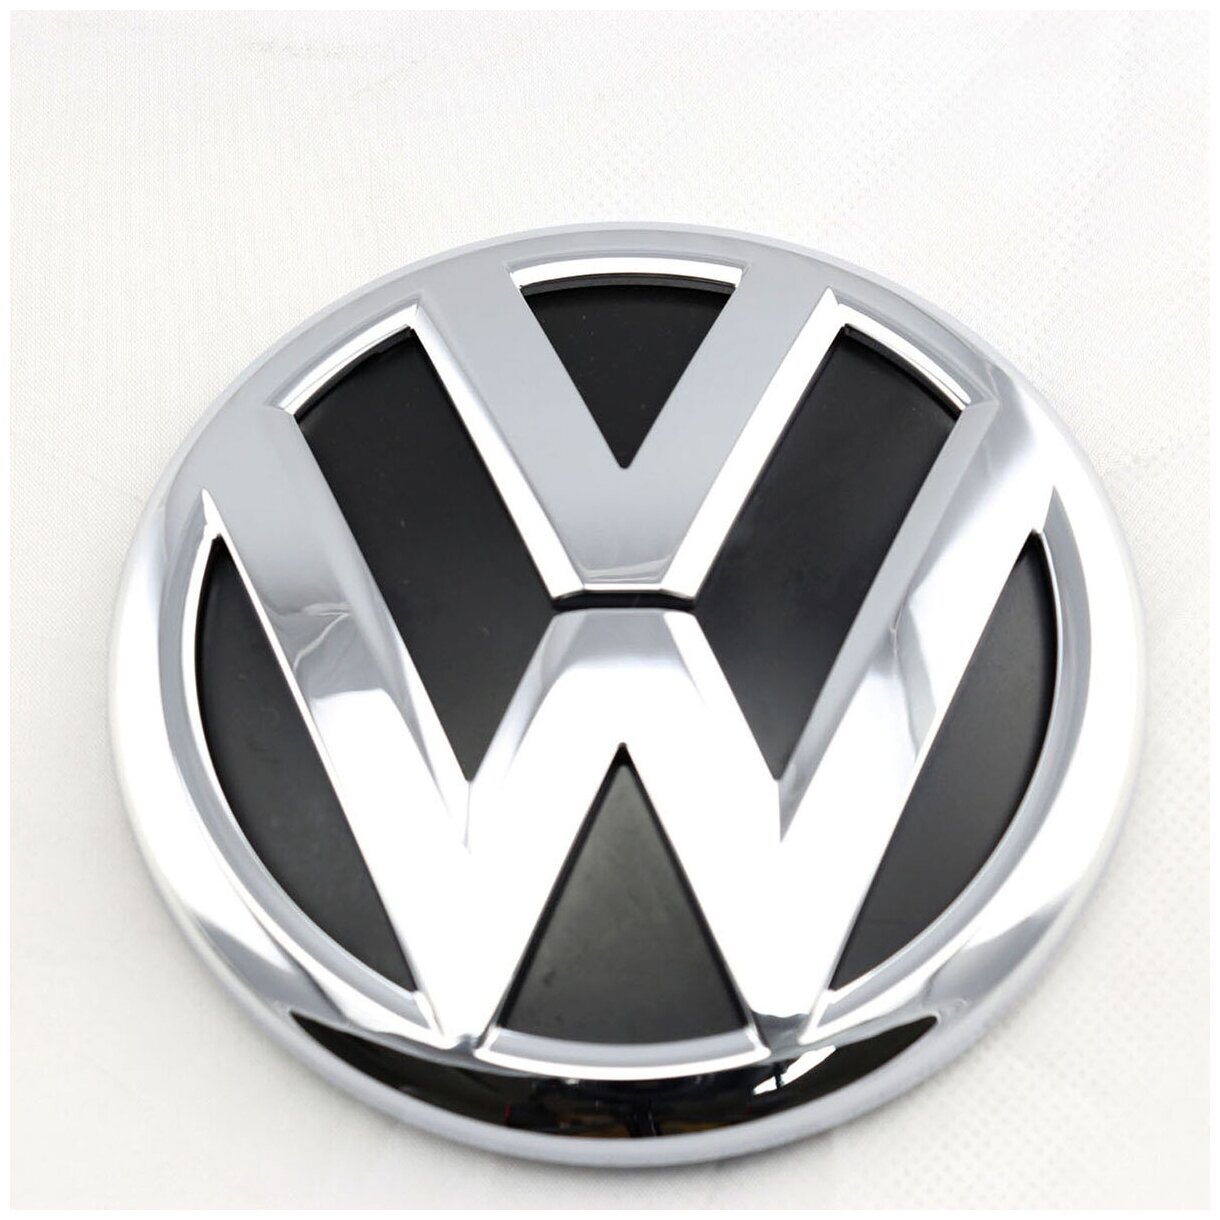 Эмблема на крышку багажника задняя Volkswagen Polo (Фольксваген Поло) Диаметр 10 см.